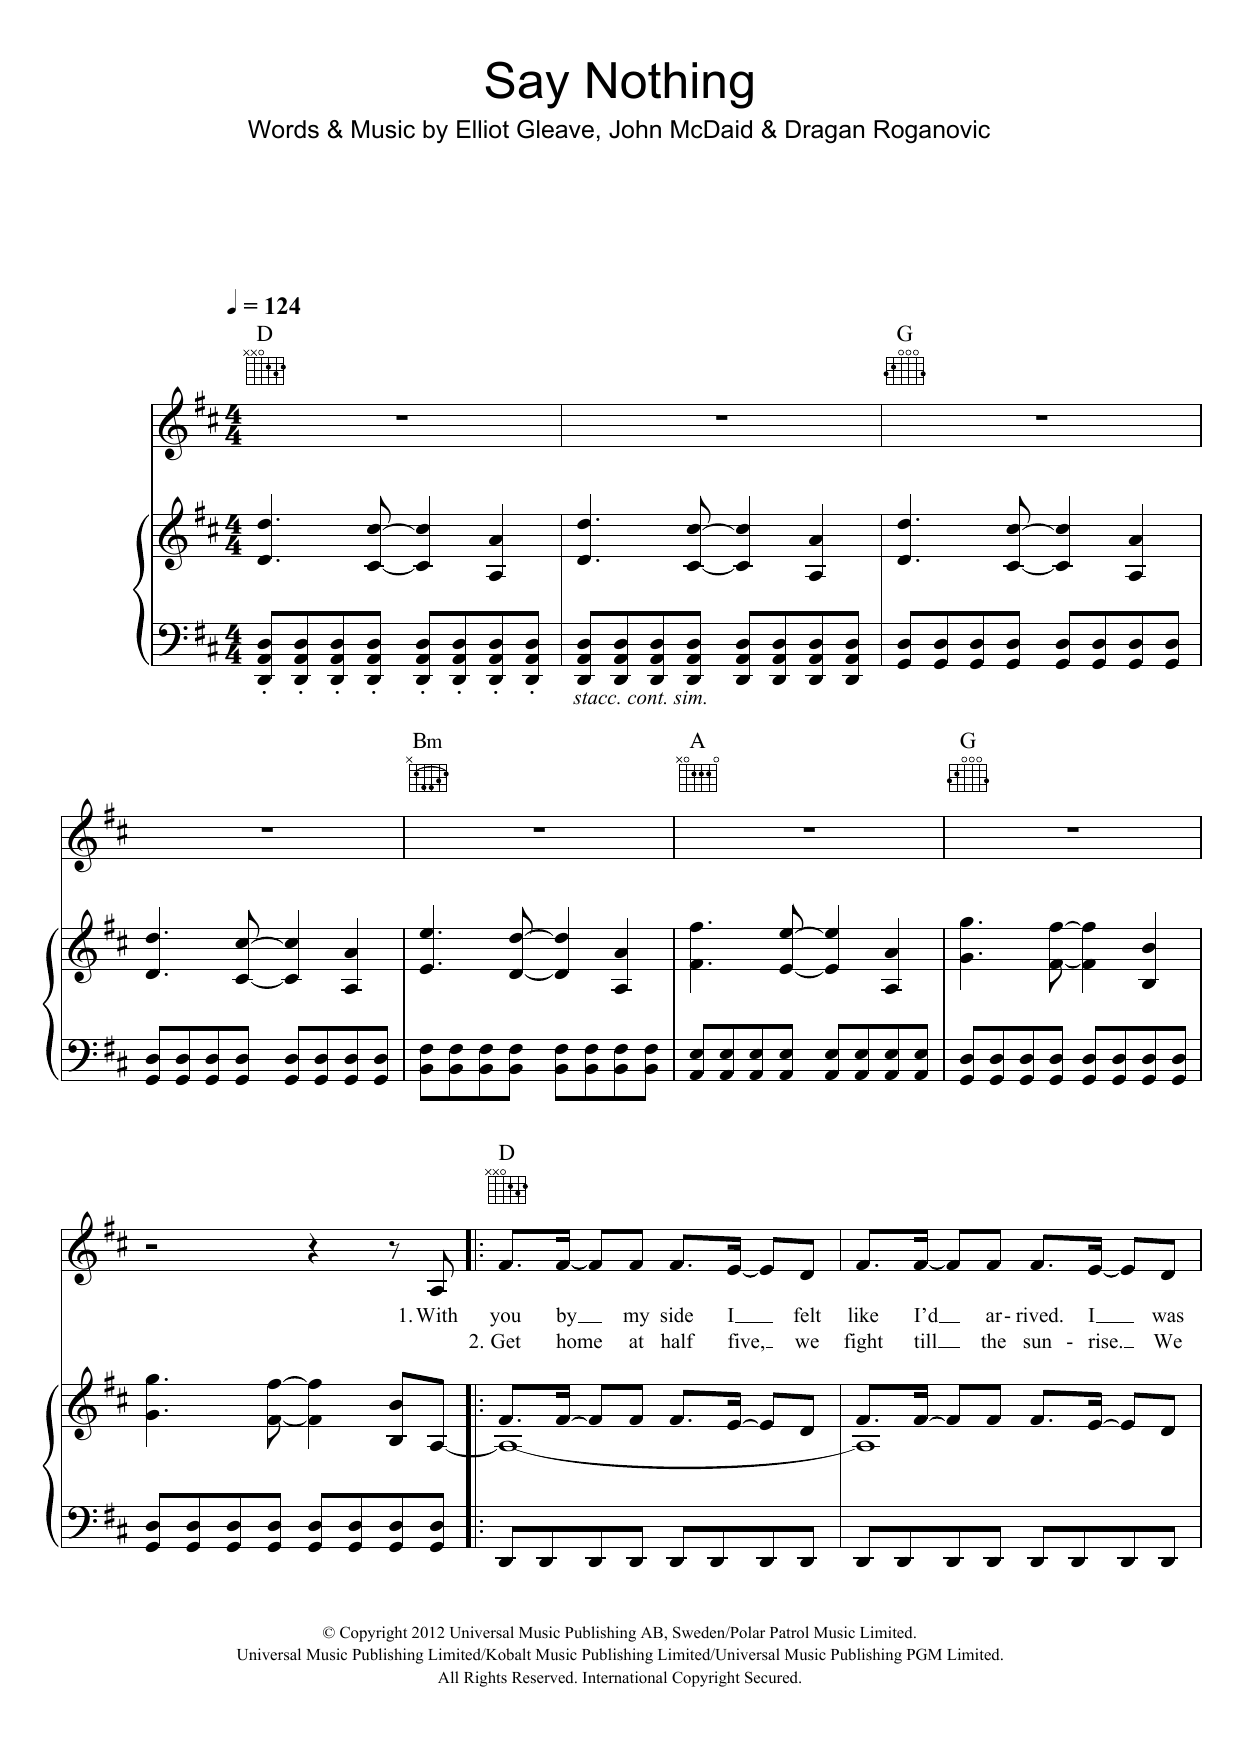 Example "Say Nothing" Sheet Music  Download Printable PDF Music